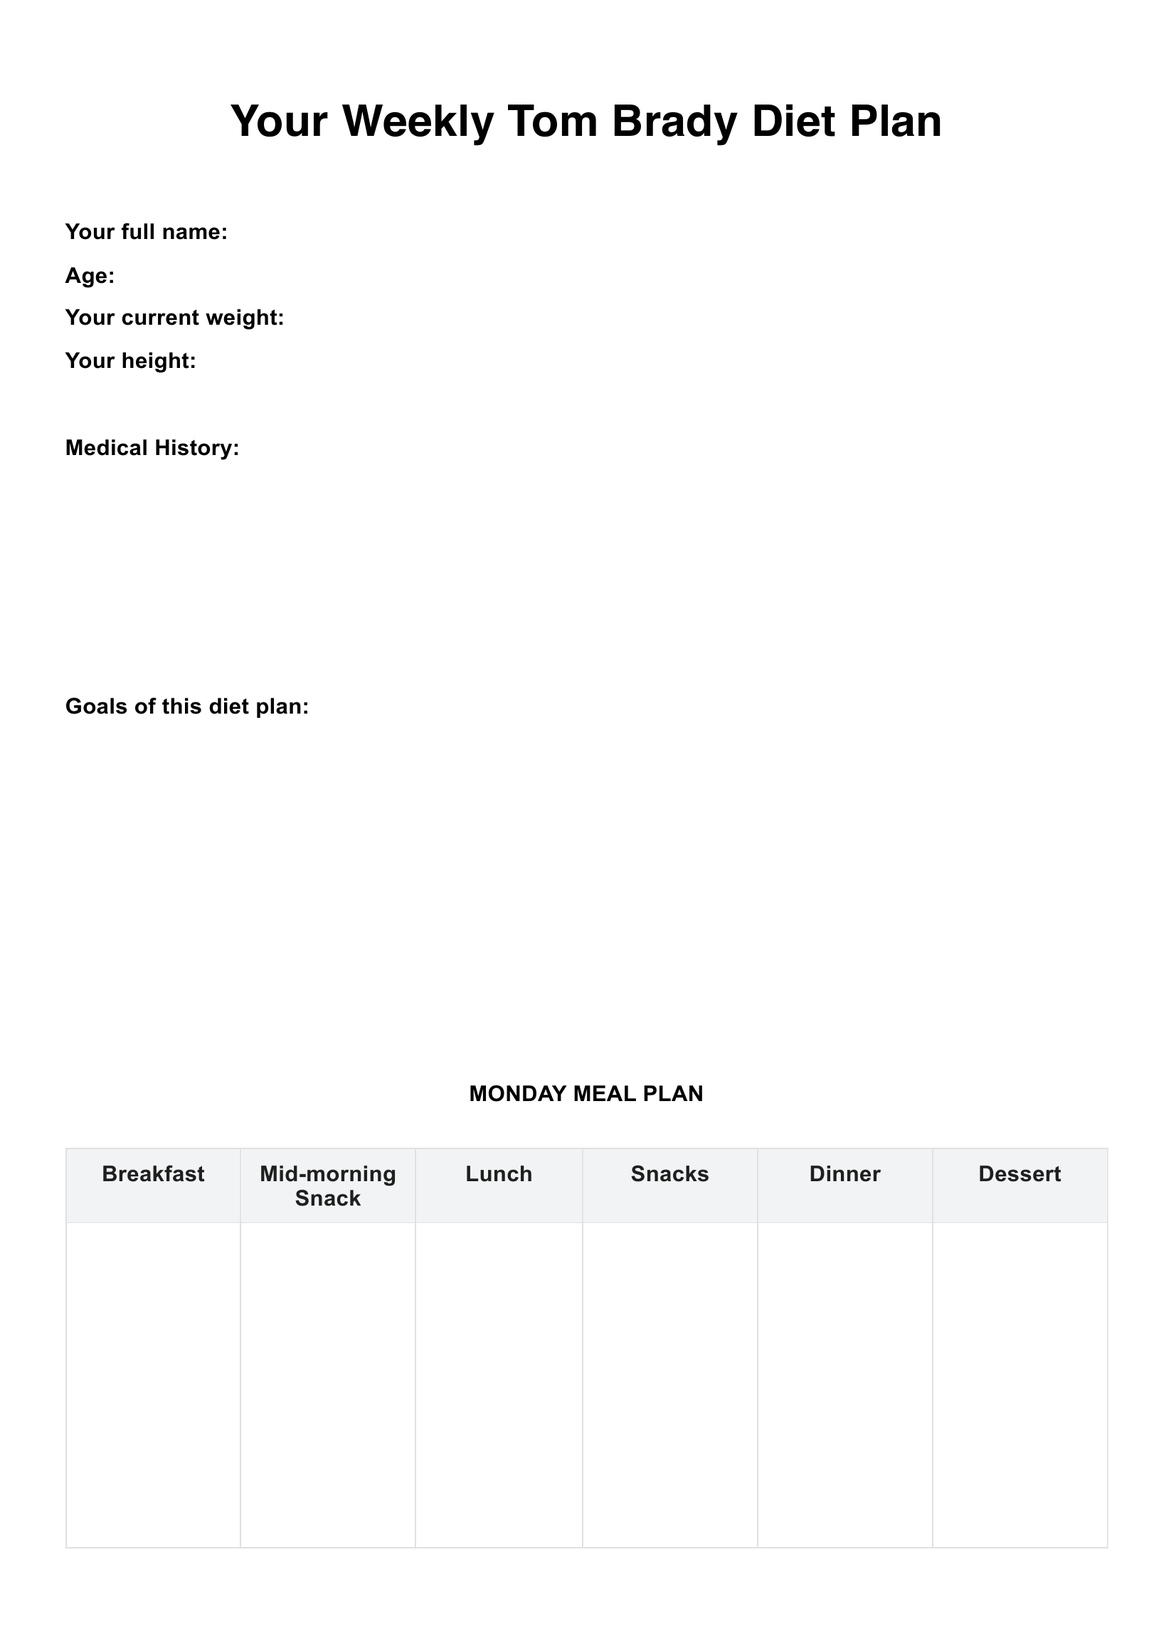 Tom Brady Diet Plan PDF Example